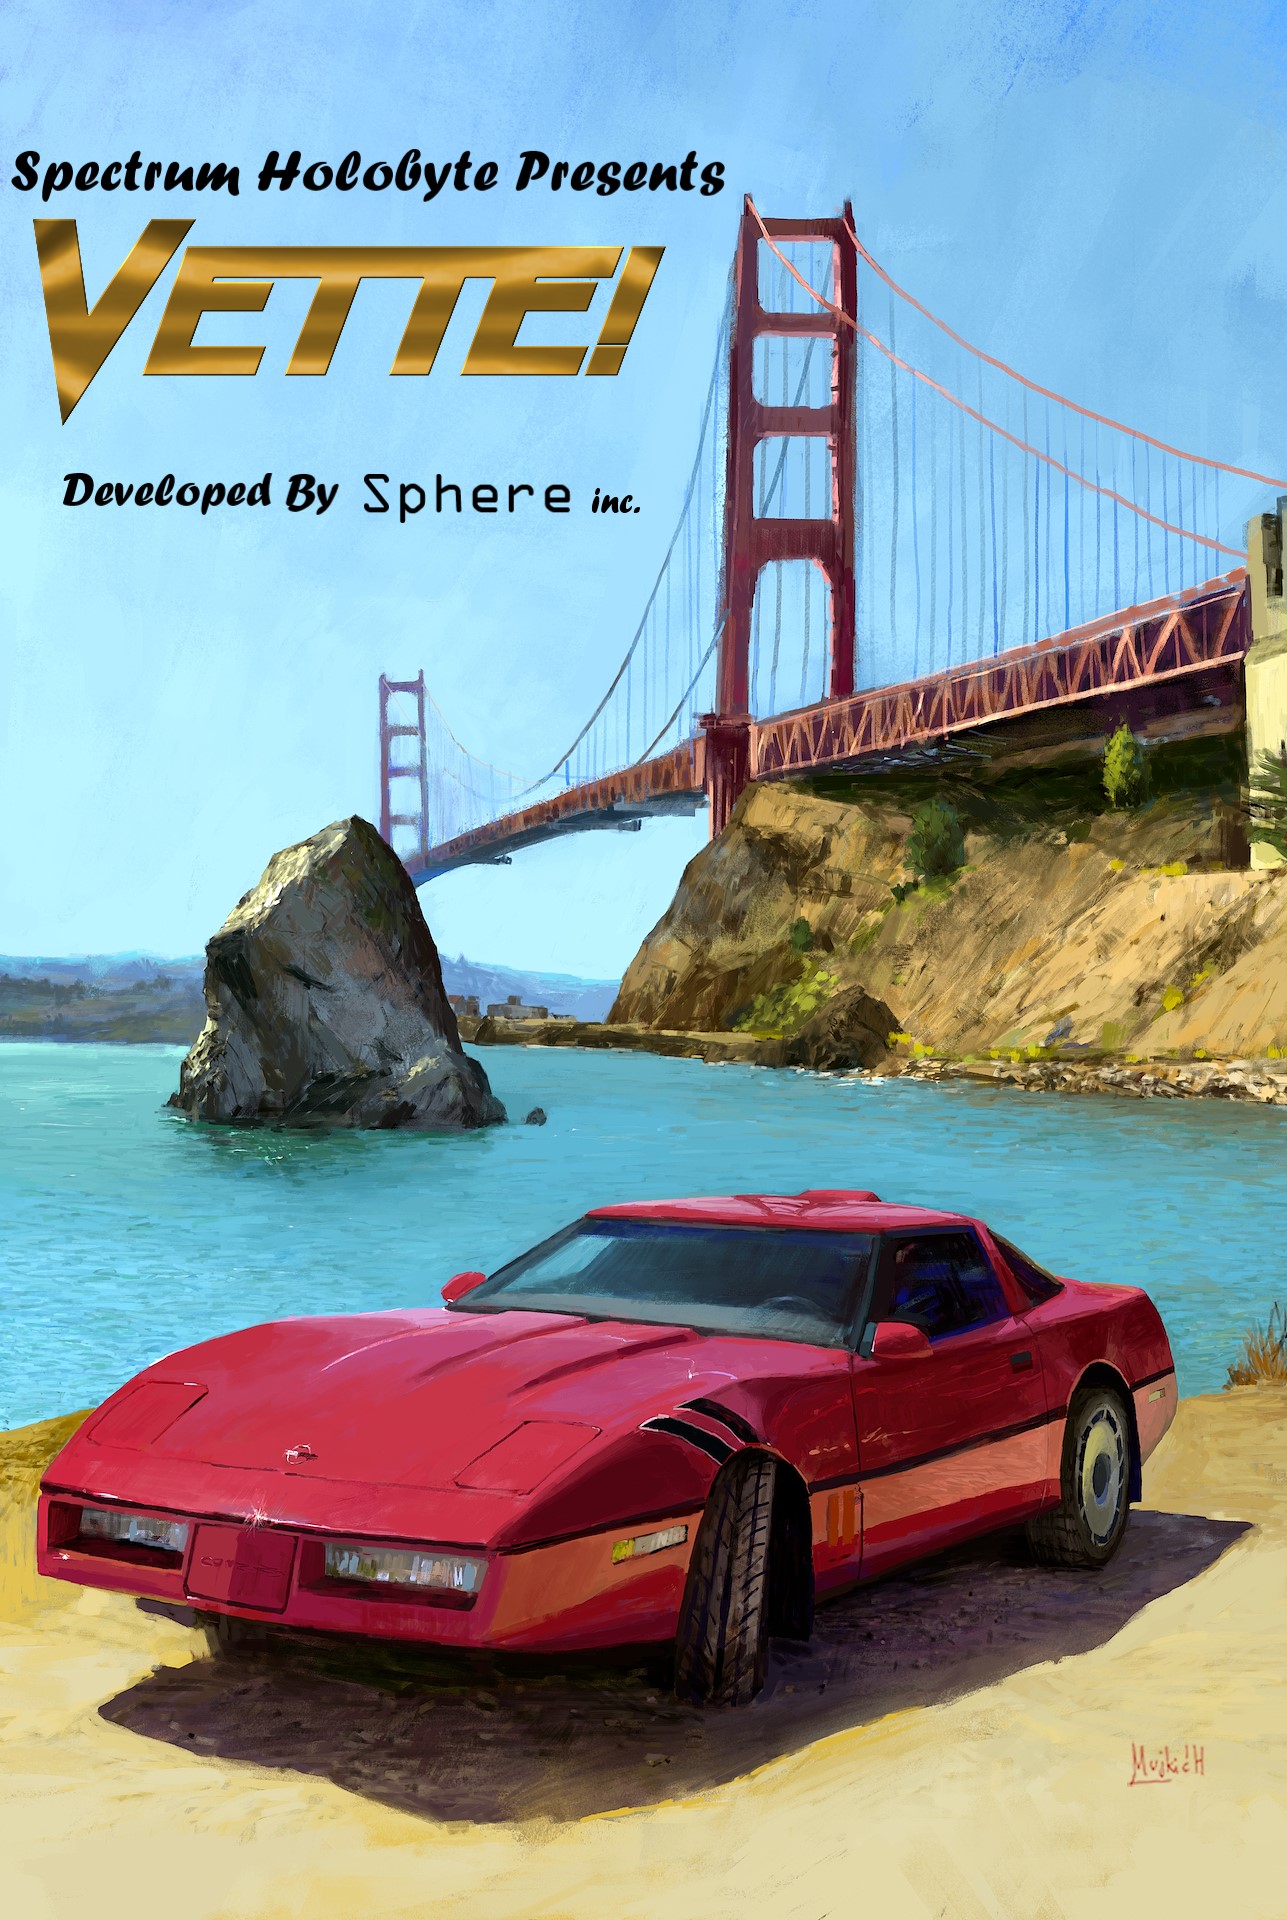 Vette!: The Street Race Simulation through San Francisco